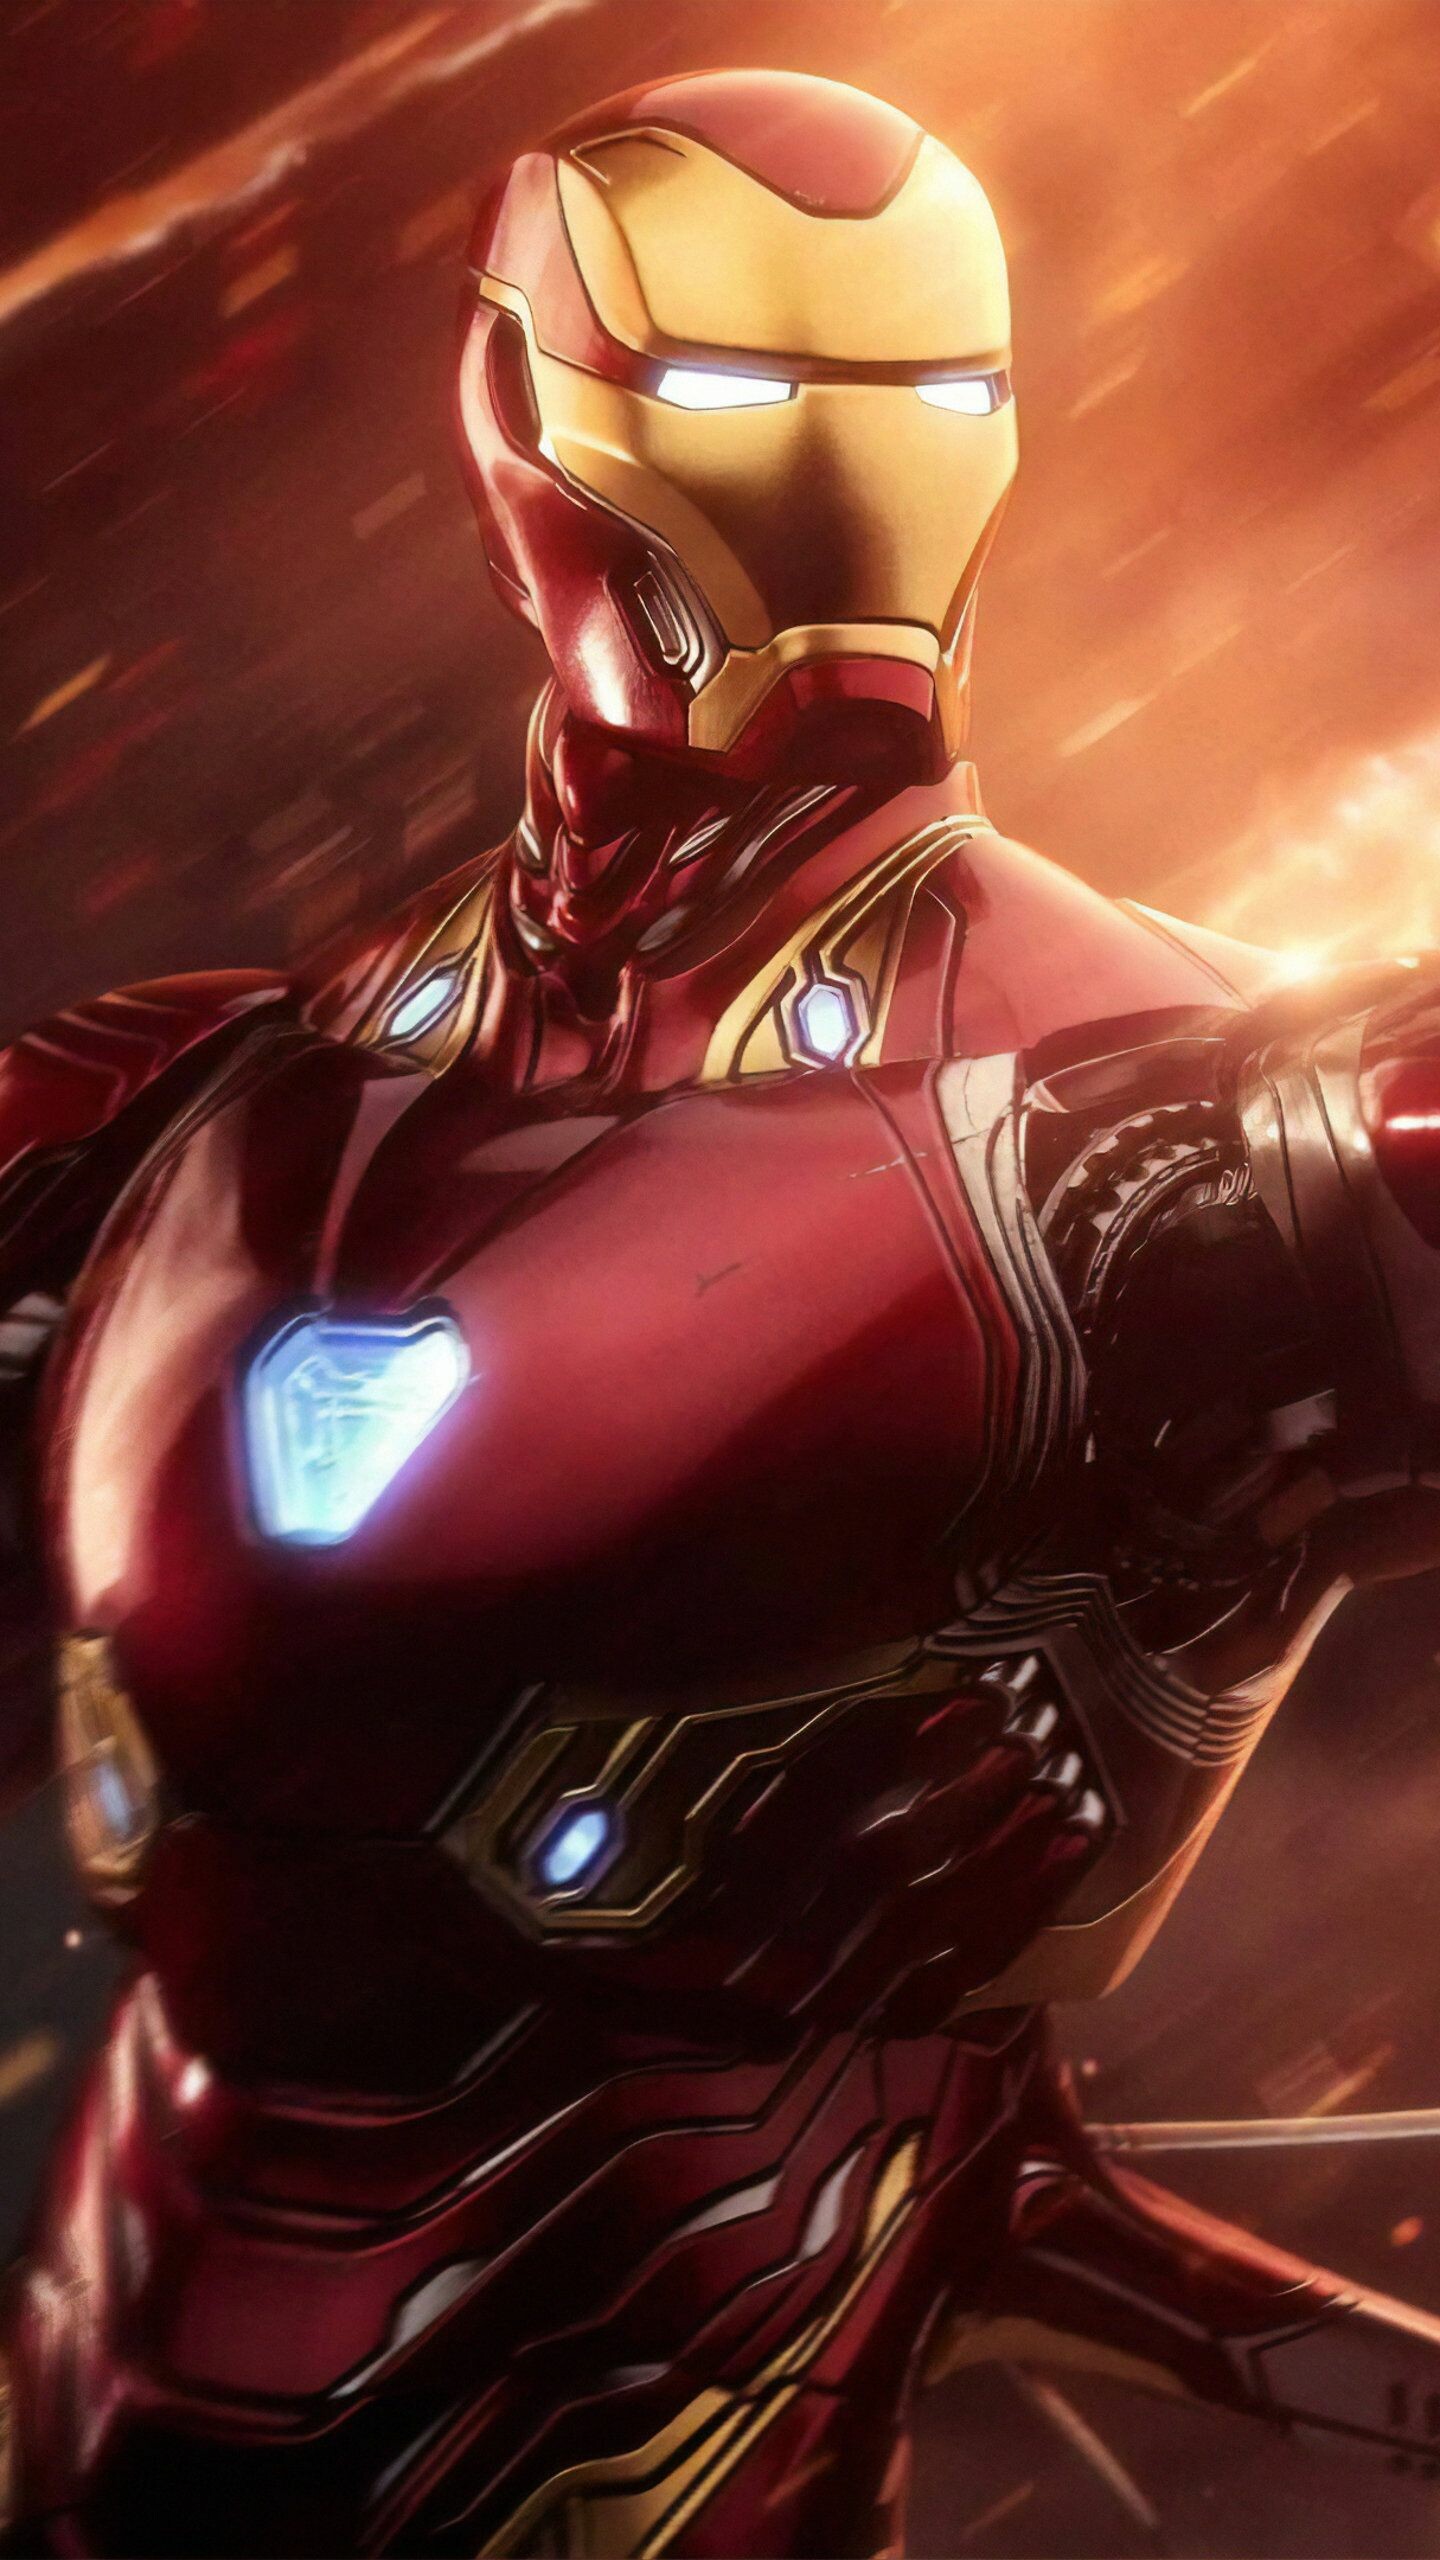 Marvel Heroes: Iron Man, Tony Stark, The wealthy son of industrialist. 1440x2560 HD Wallpaper.